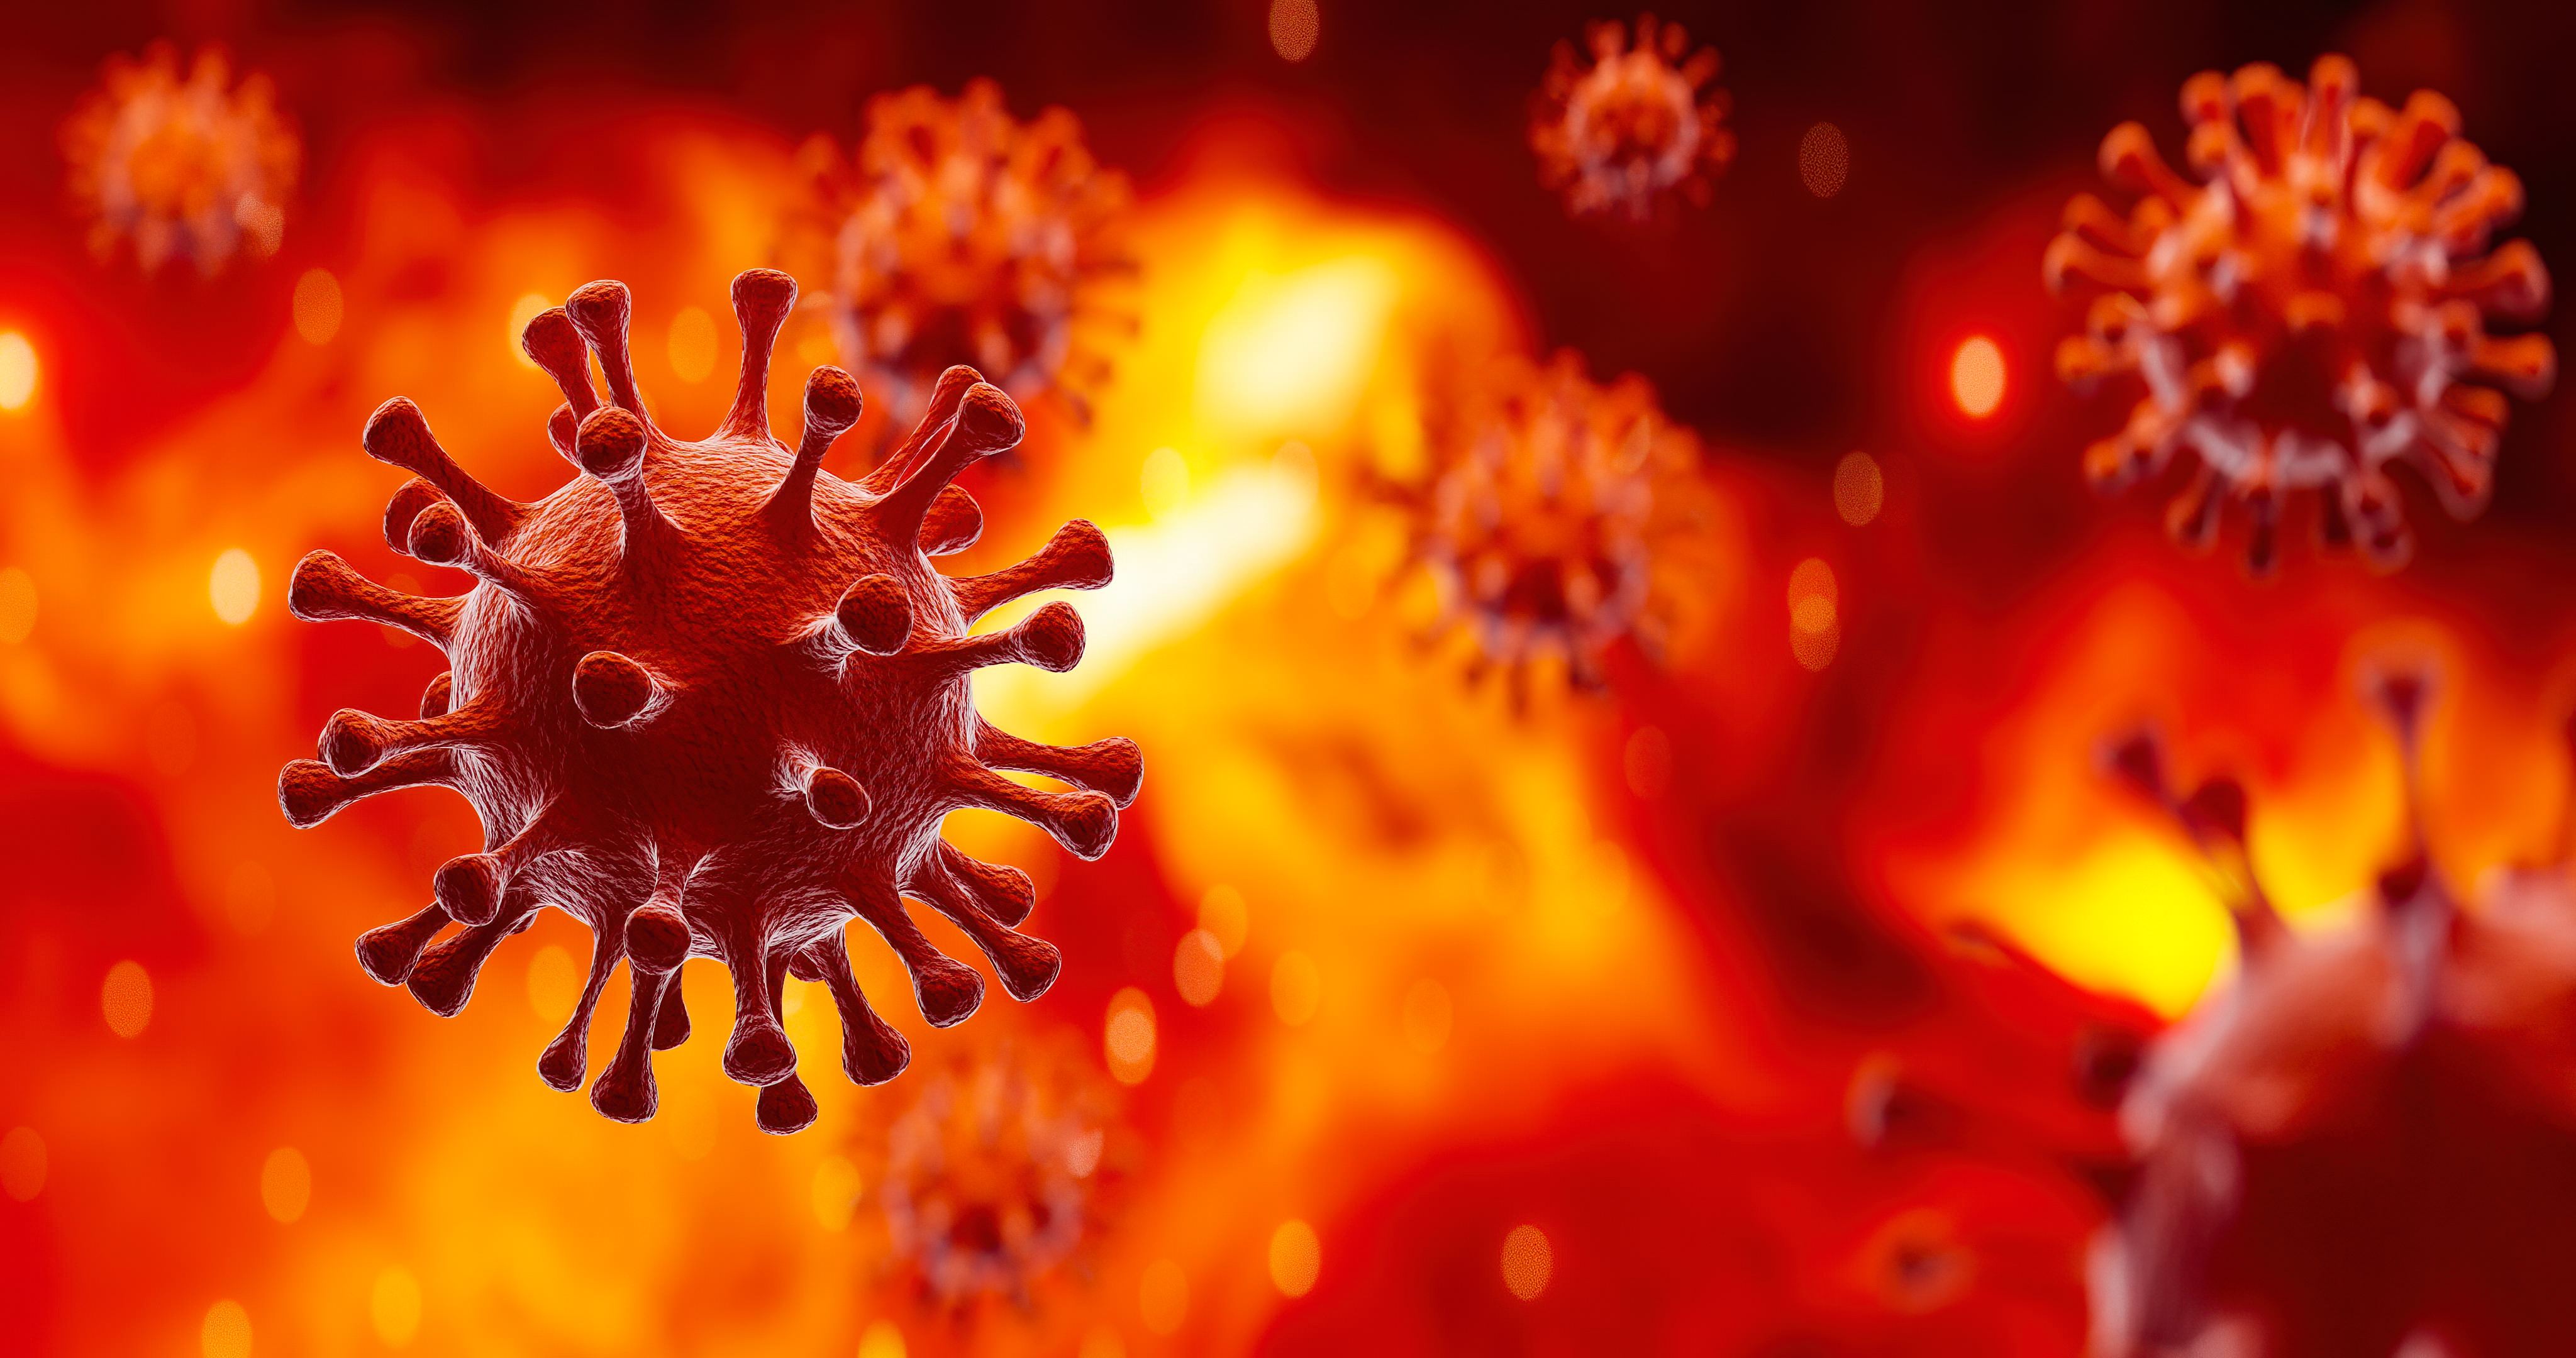 image-of-flu-covid-19-virus-cell-under-the-microsc-2021-08-28-10-41-09-utc